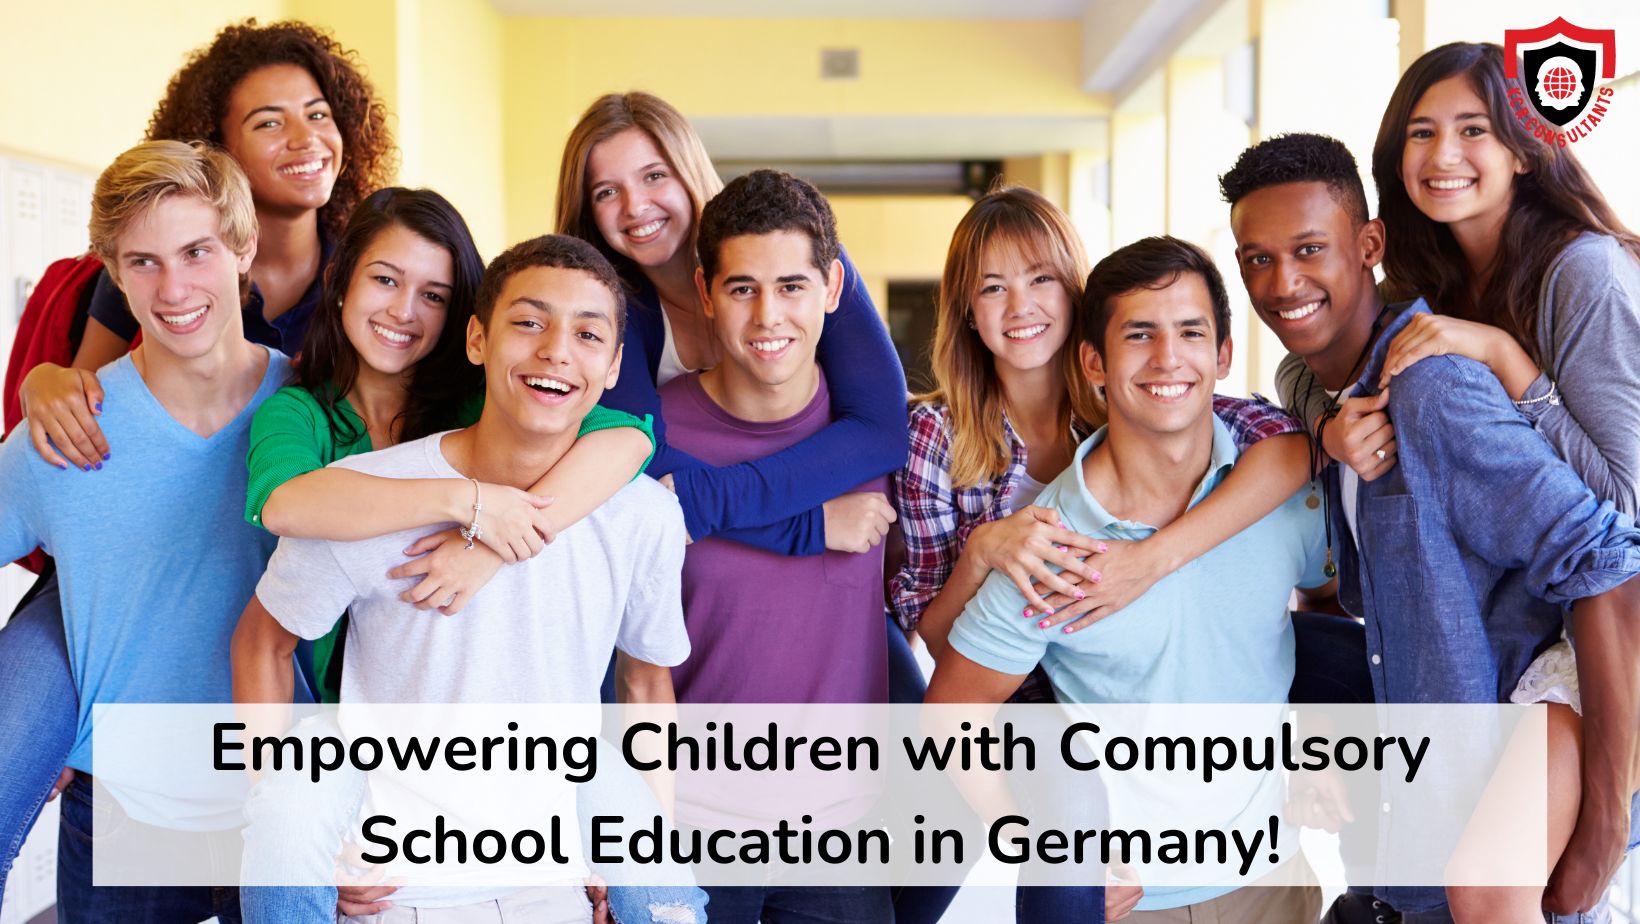 School Education in Germany - KCR CONSULTANTS 2